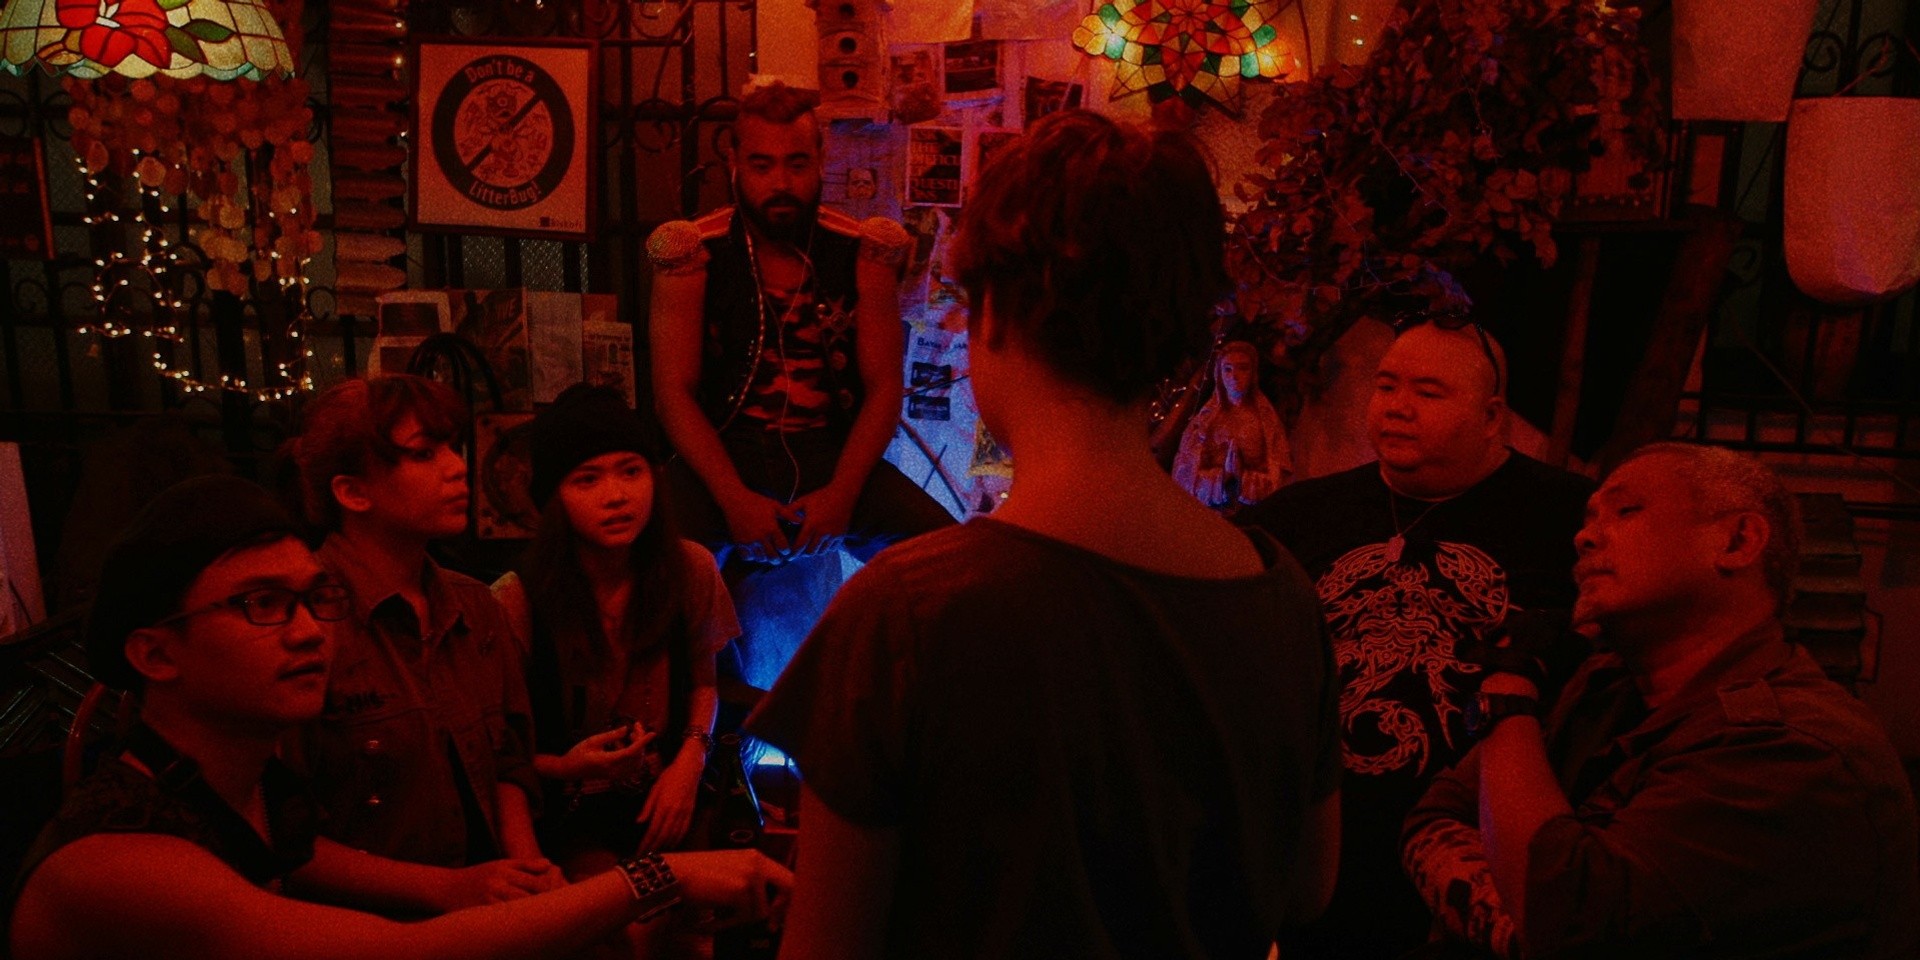 Flying Ipis featured in Vimeo Staff Pick short film Manila Death Squad